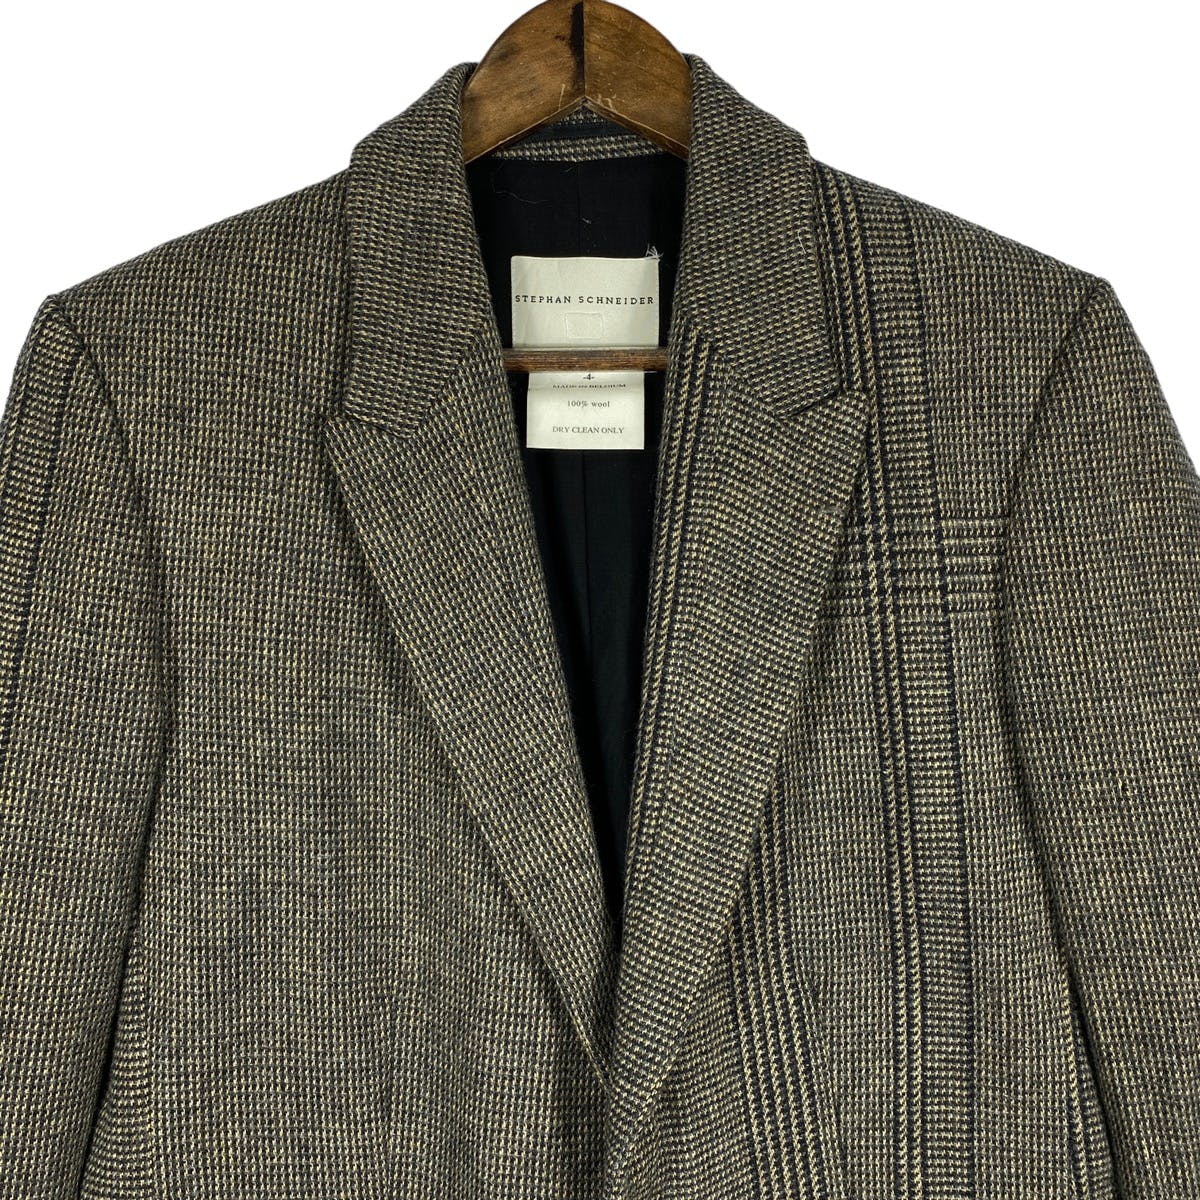 Stephan Schneider Wool Coat Jacket - 5